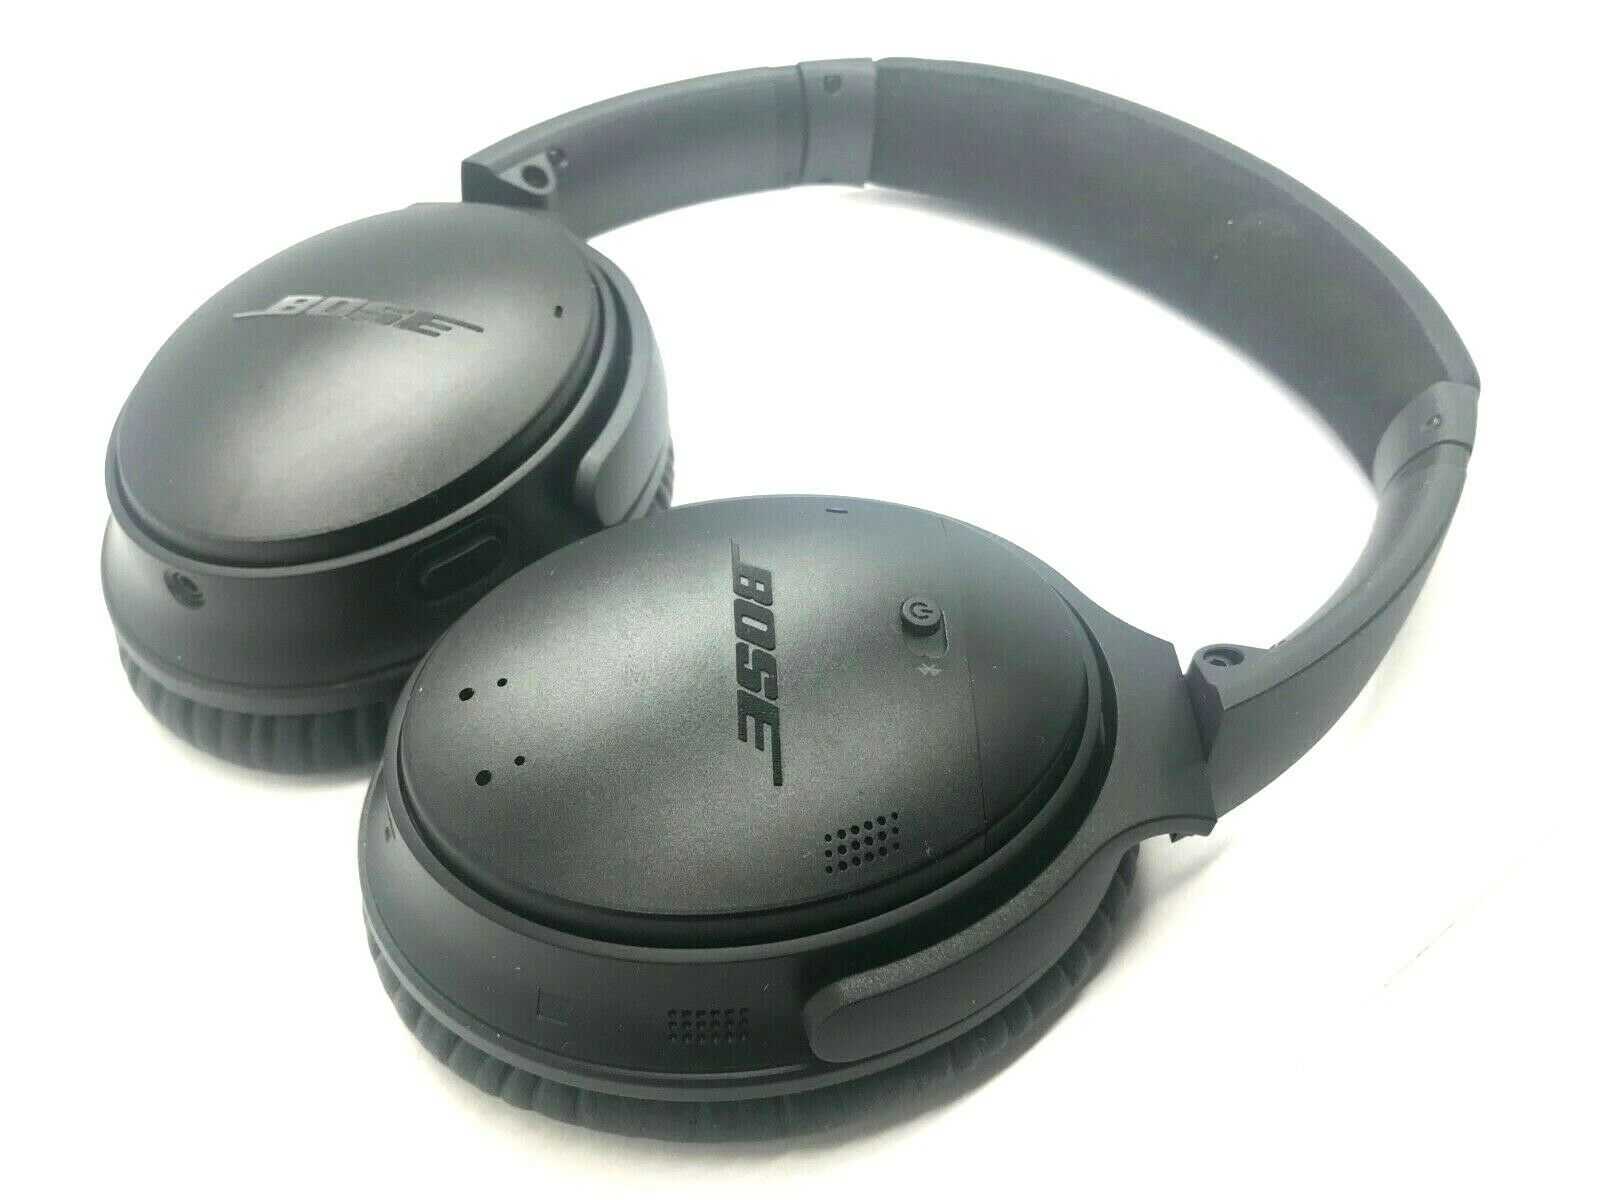 Quietcomfort 35 ii gaming headset | bose